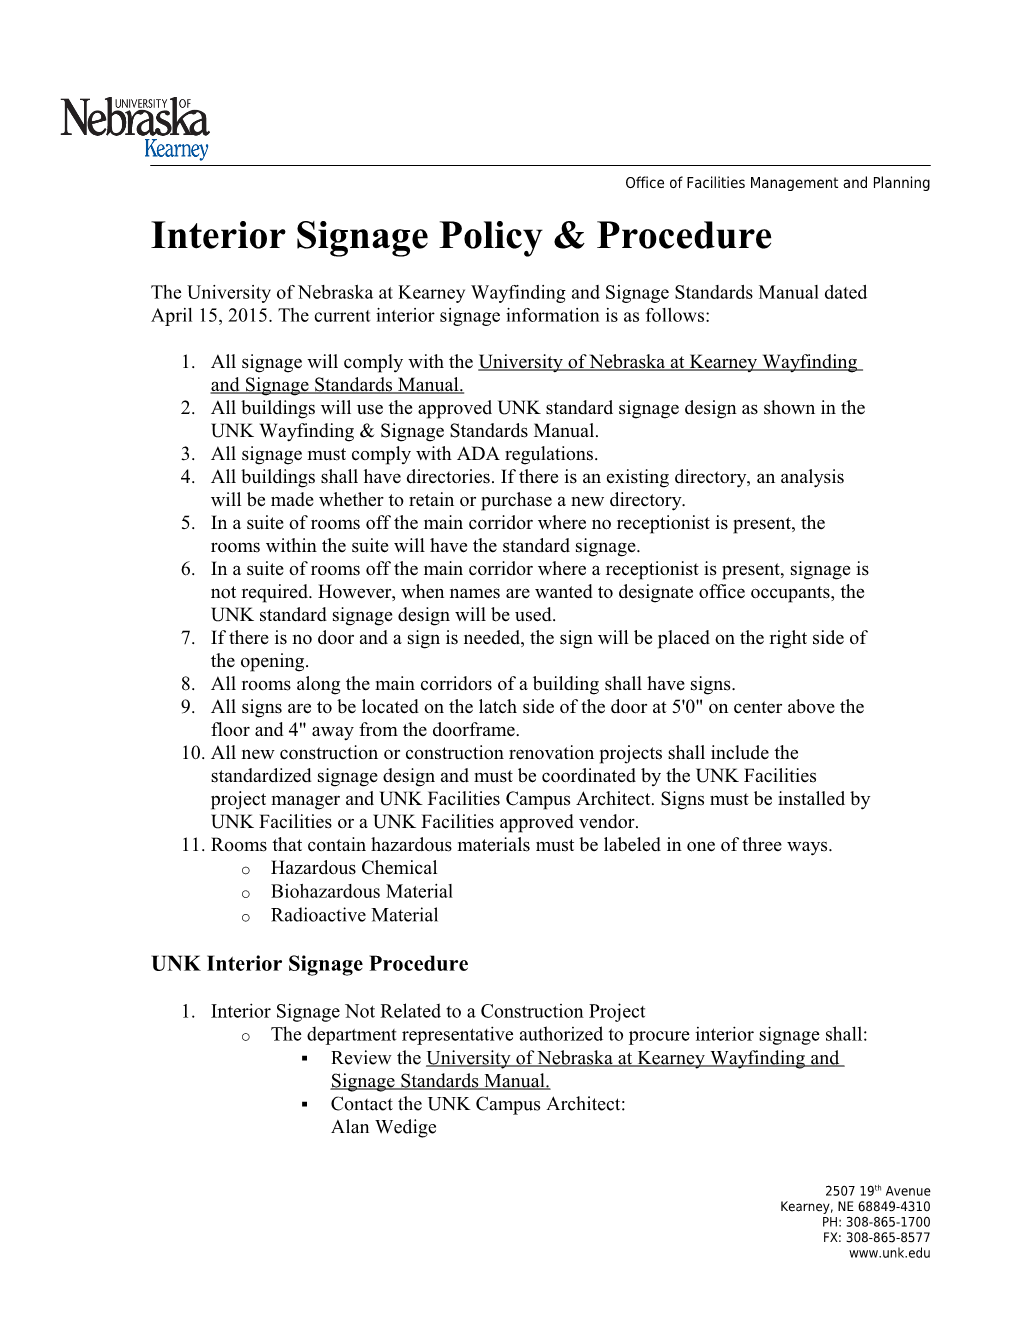 Interior Signage Policy & Procedure